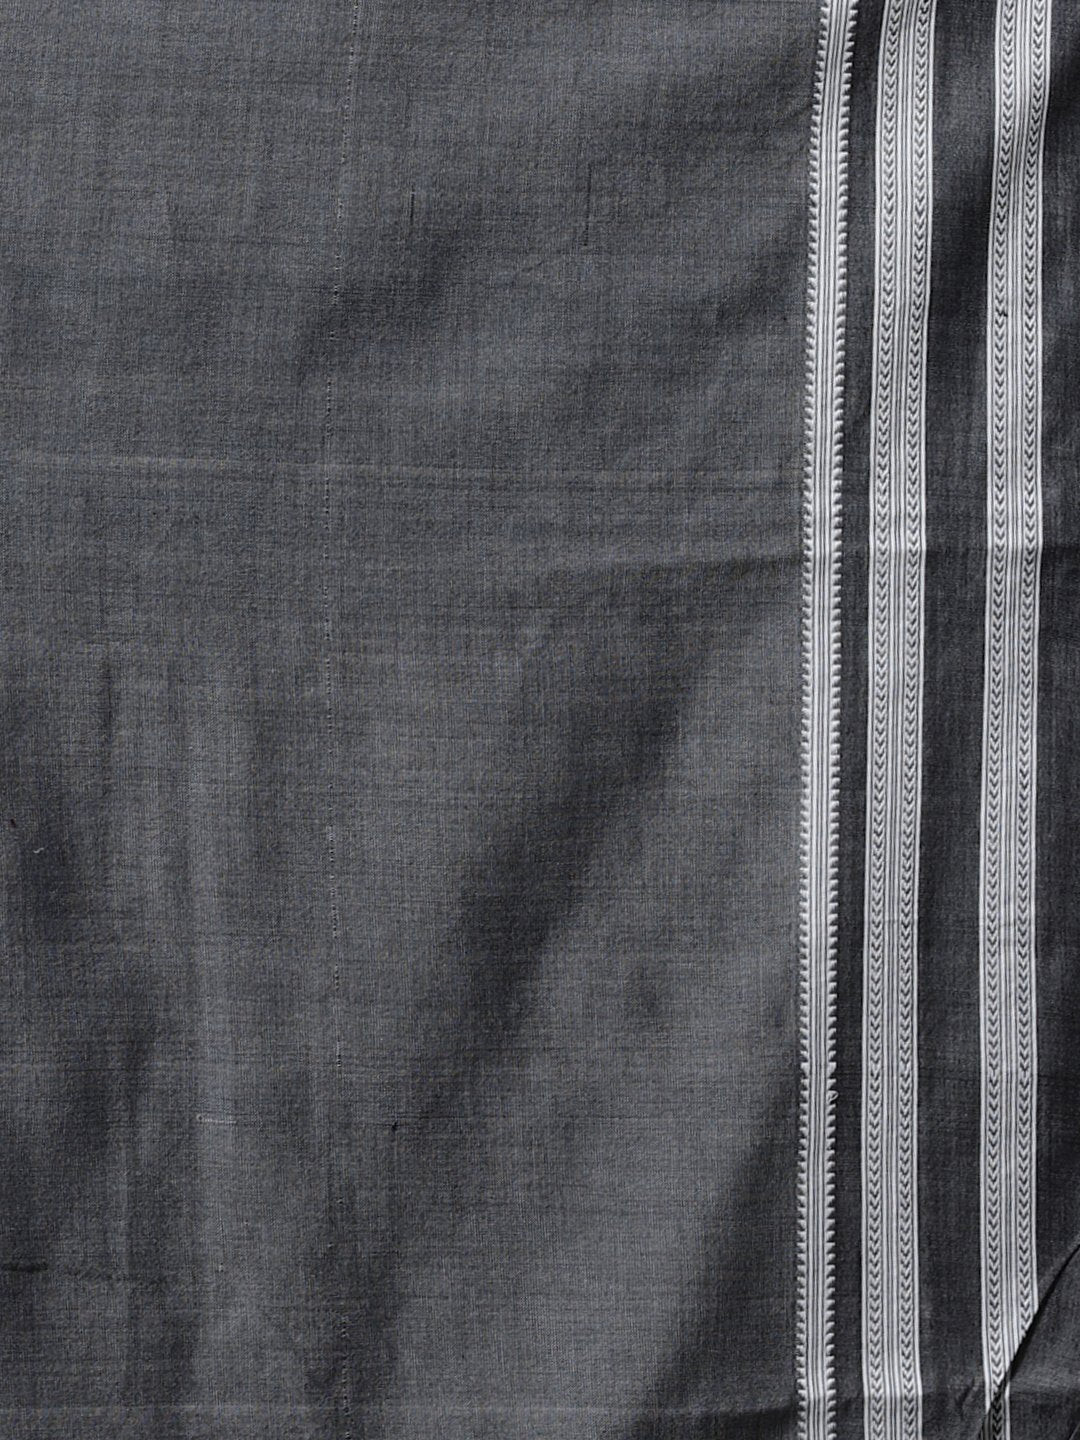 Ilkal black handloom cotton saree